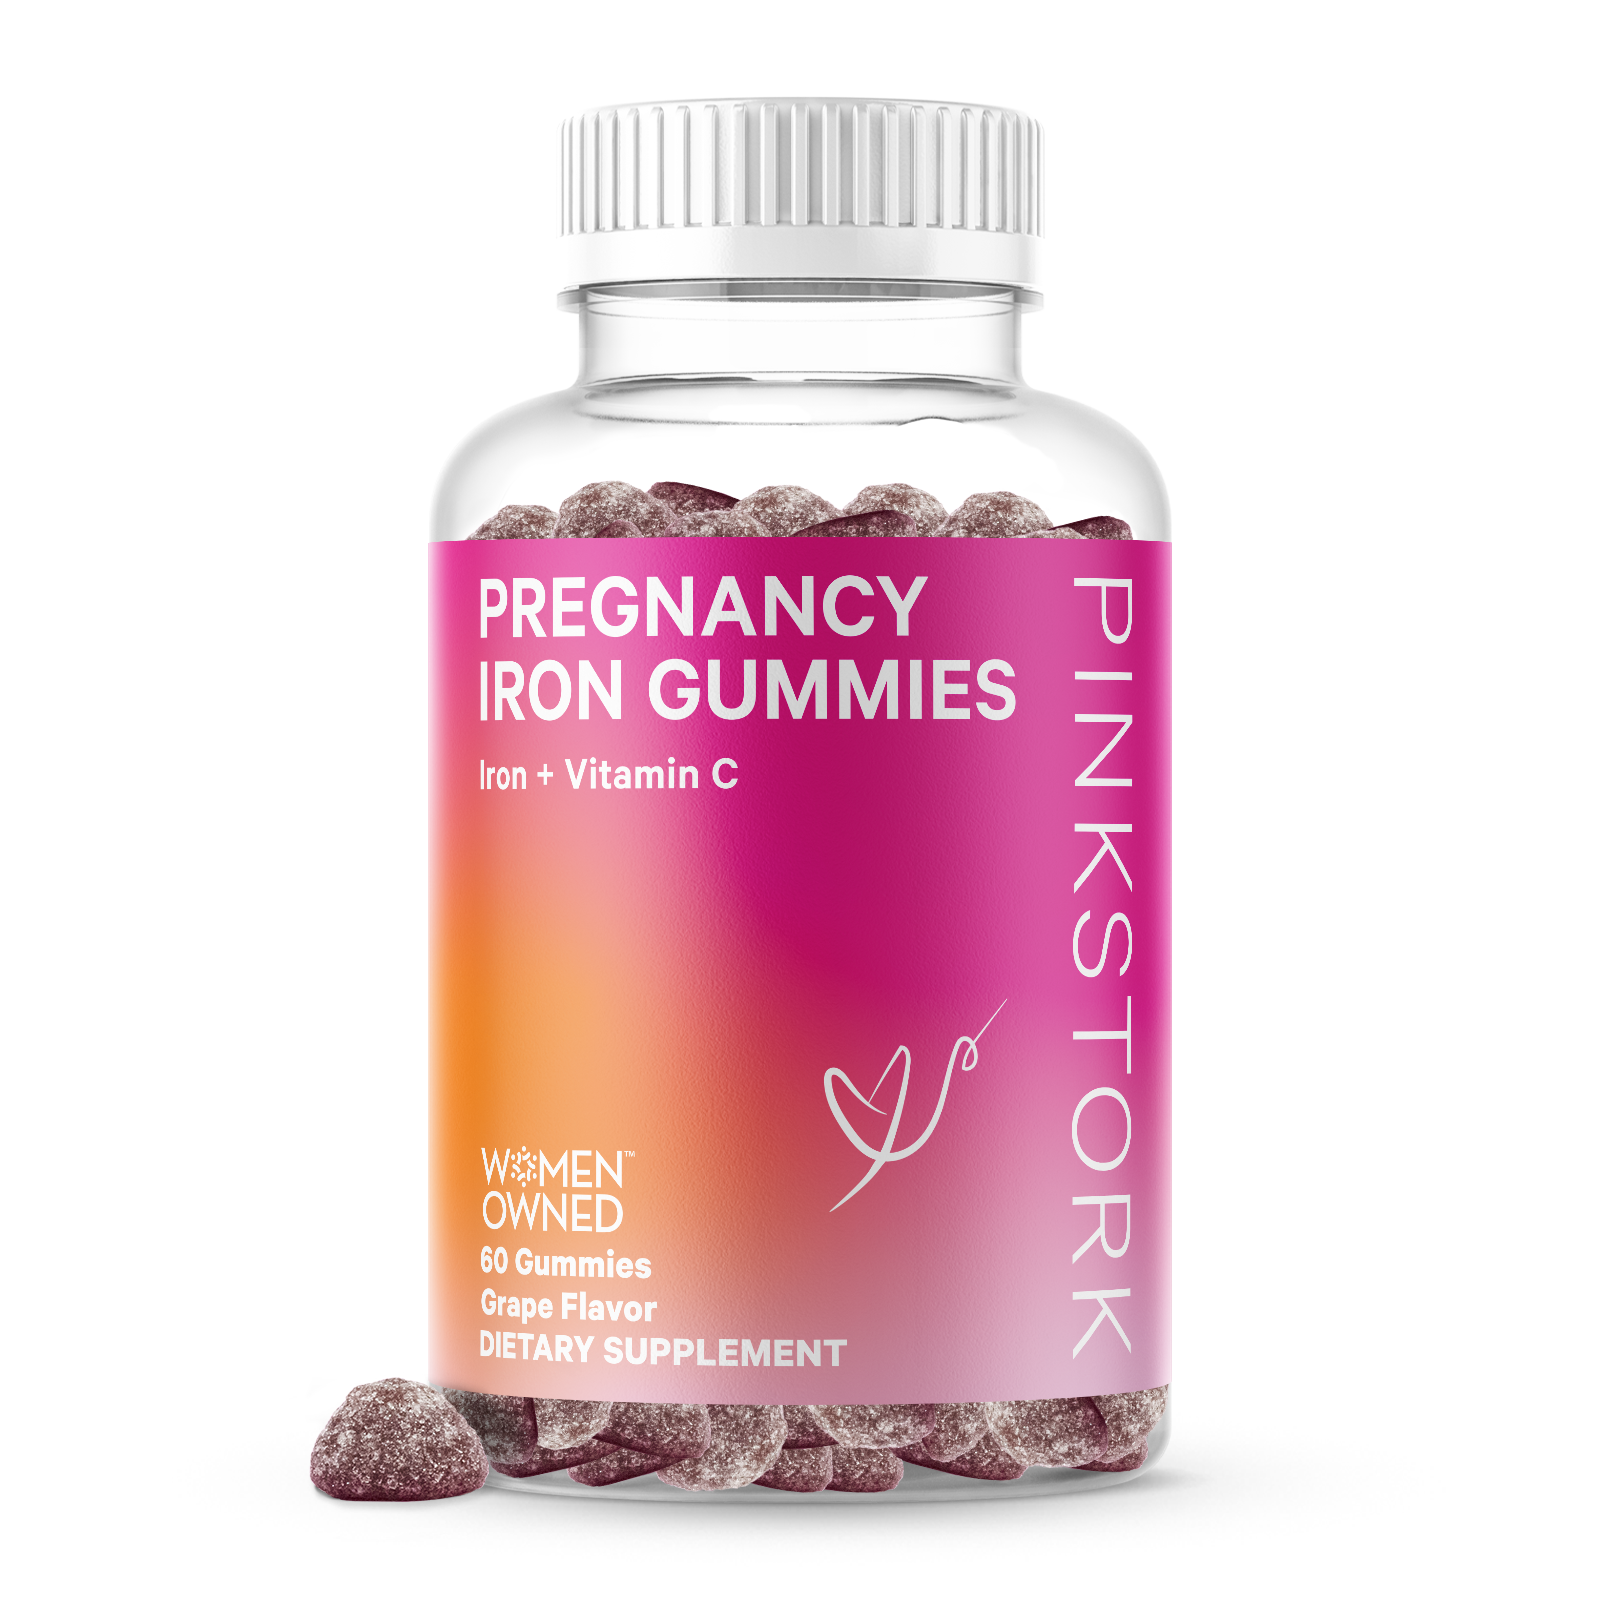 Pregnancy Iron Gummies